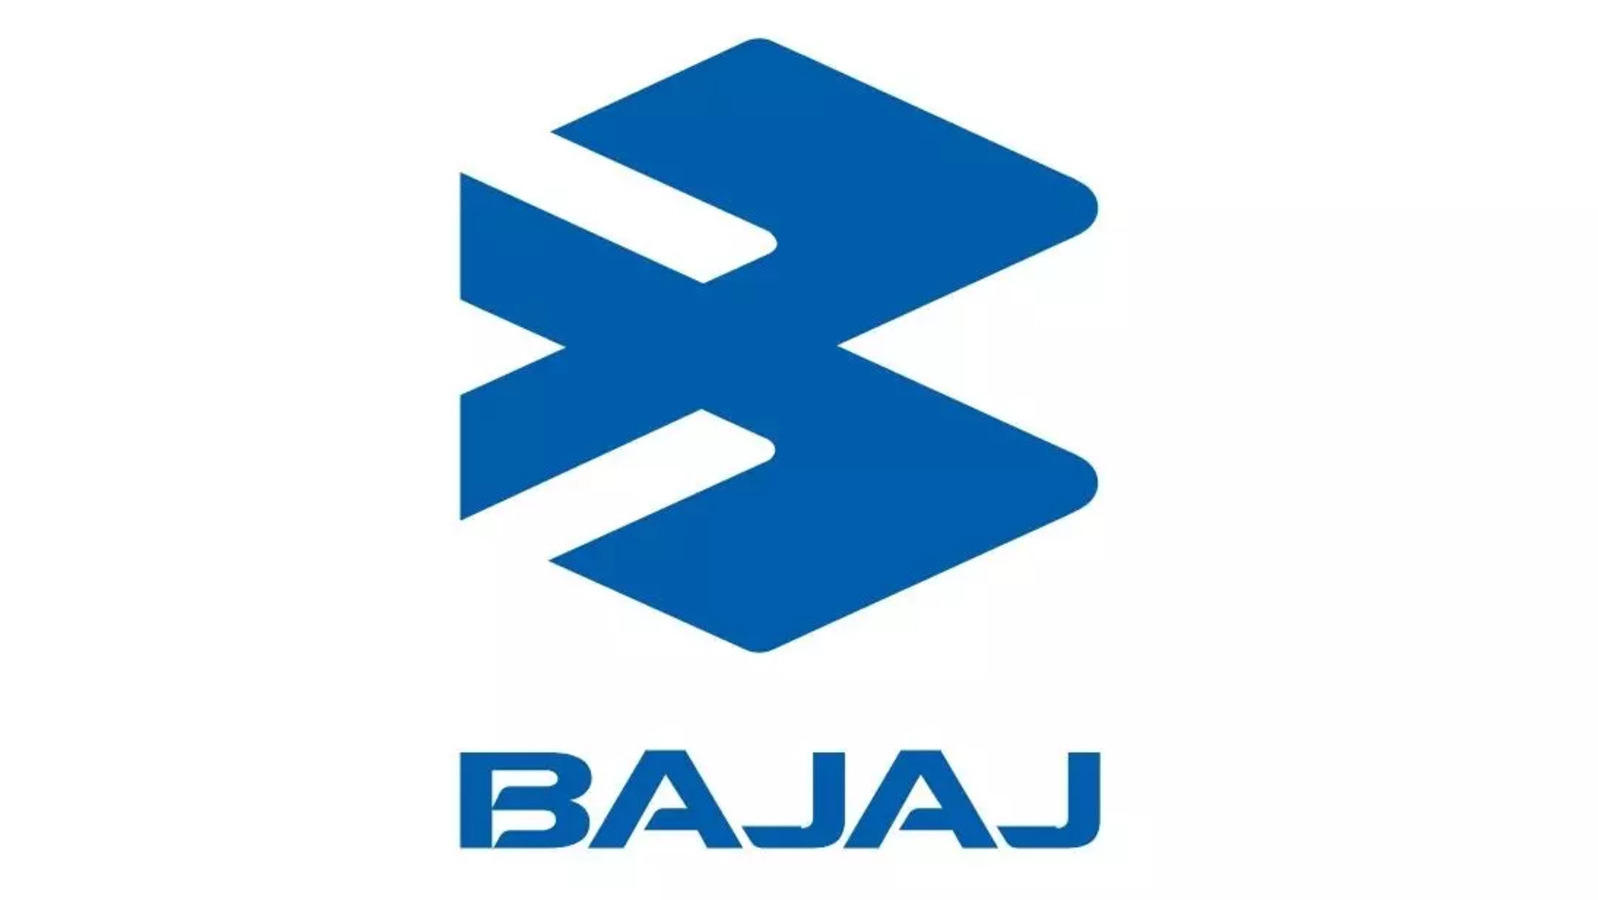 Bajaj Auto Q1 results: Profit jumps 42% to Rs 1,665 crore, sales